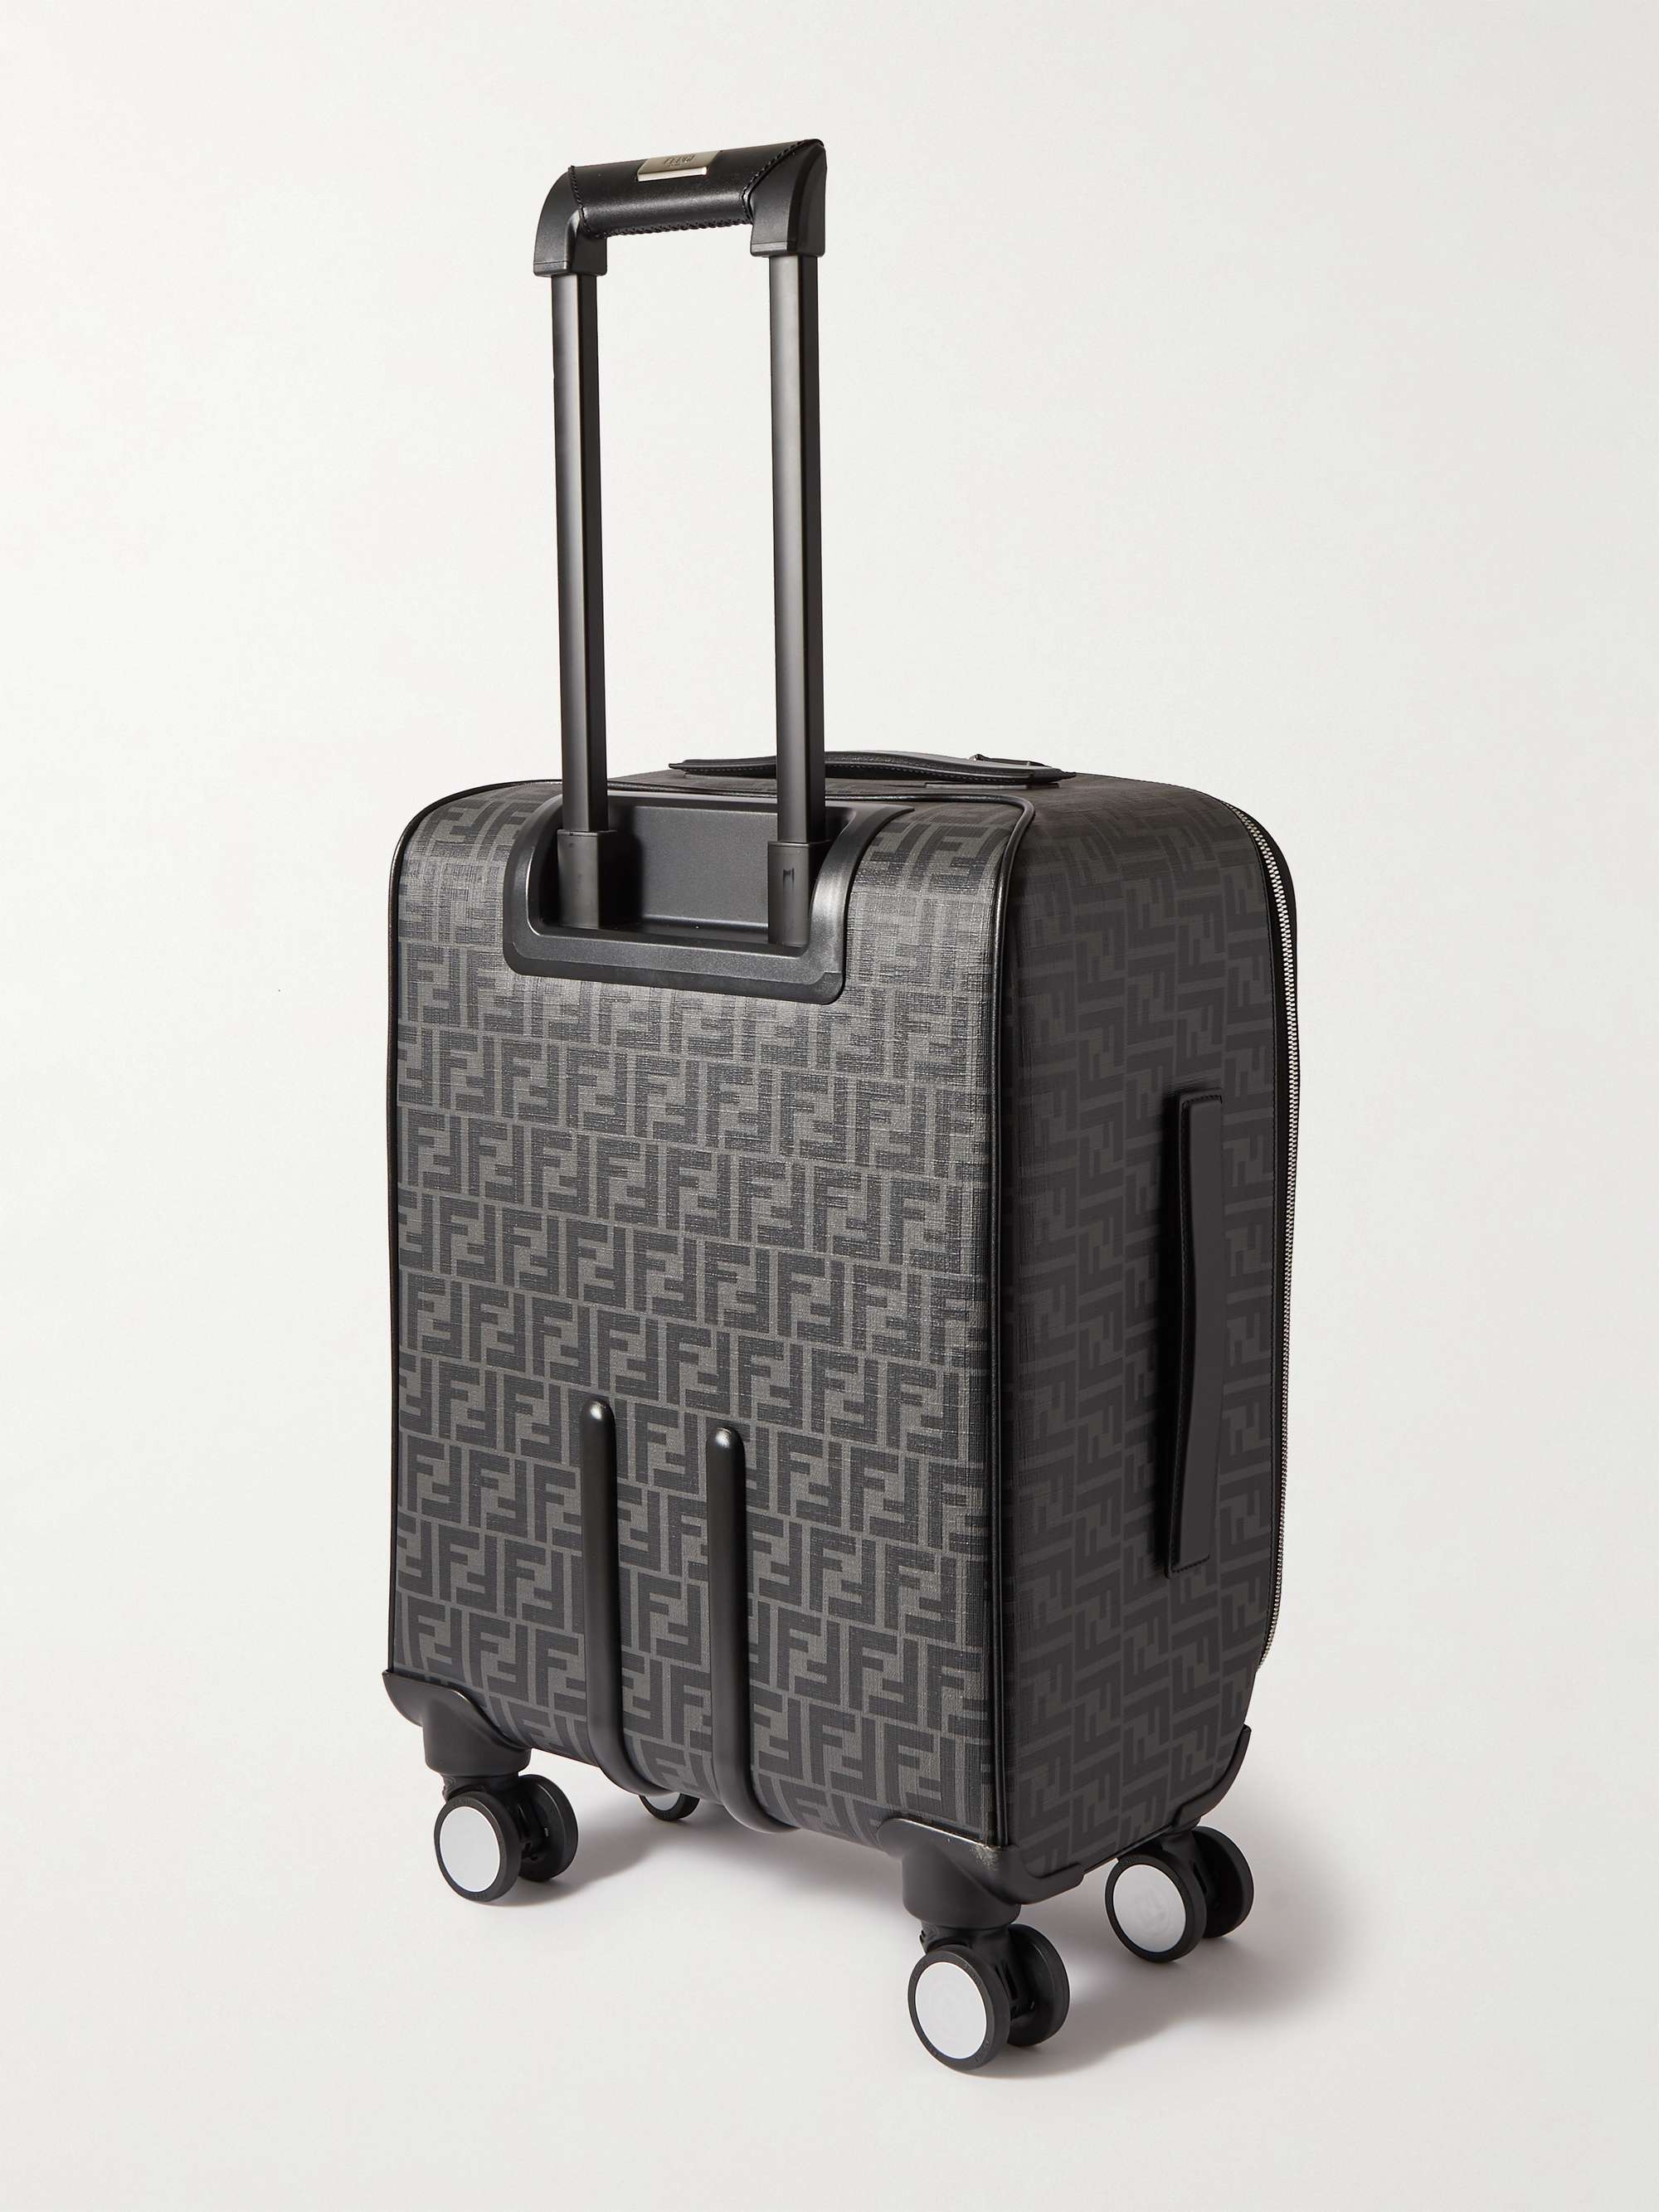 FENDI Leather-Trimmed Logo-Jacquard Canvas Suitcase